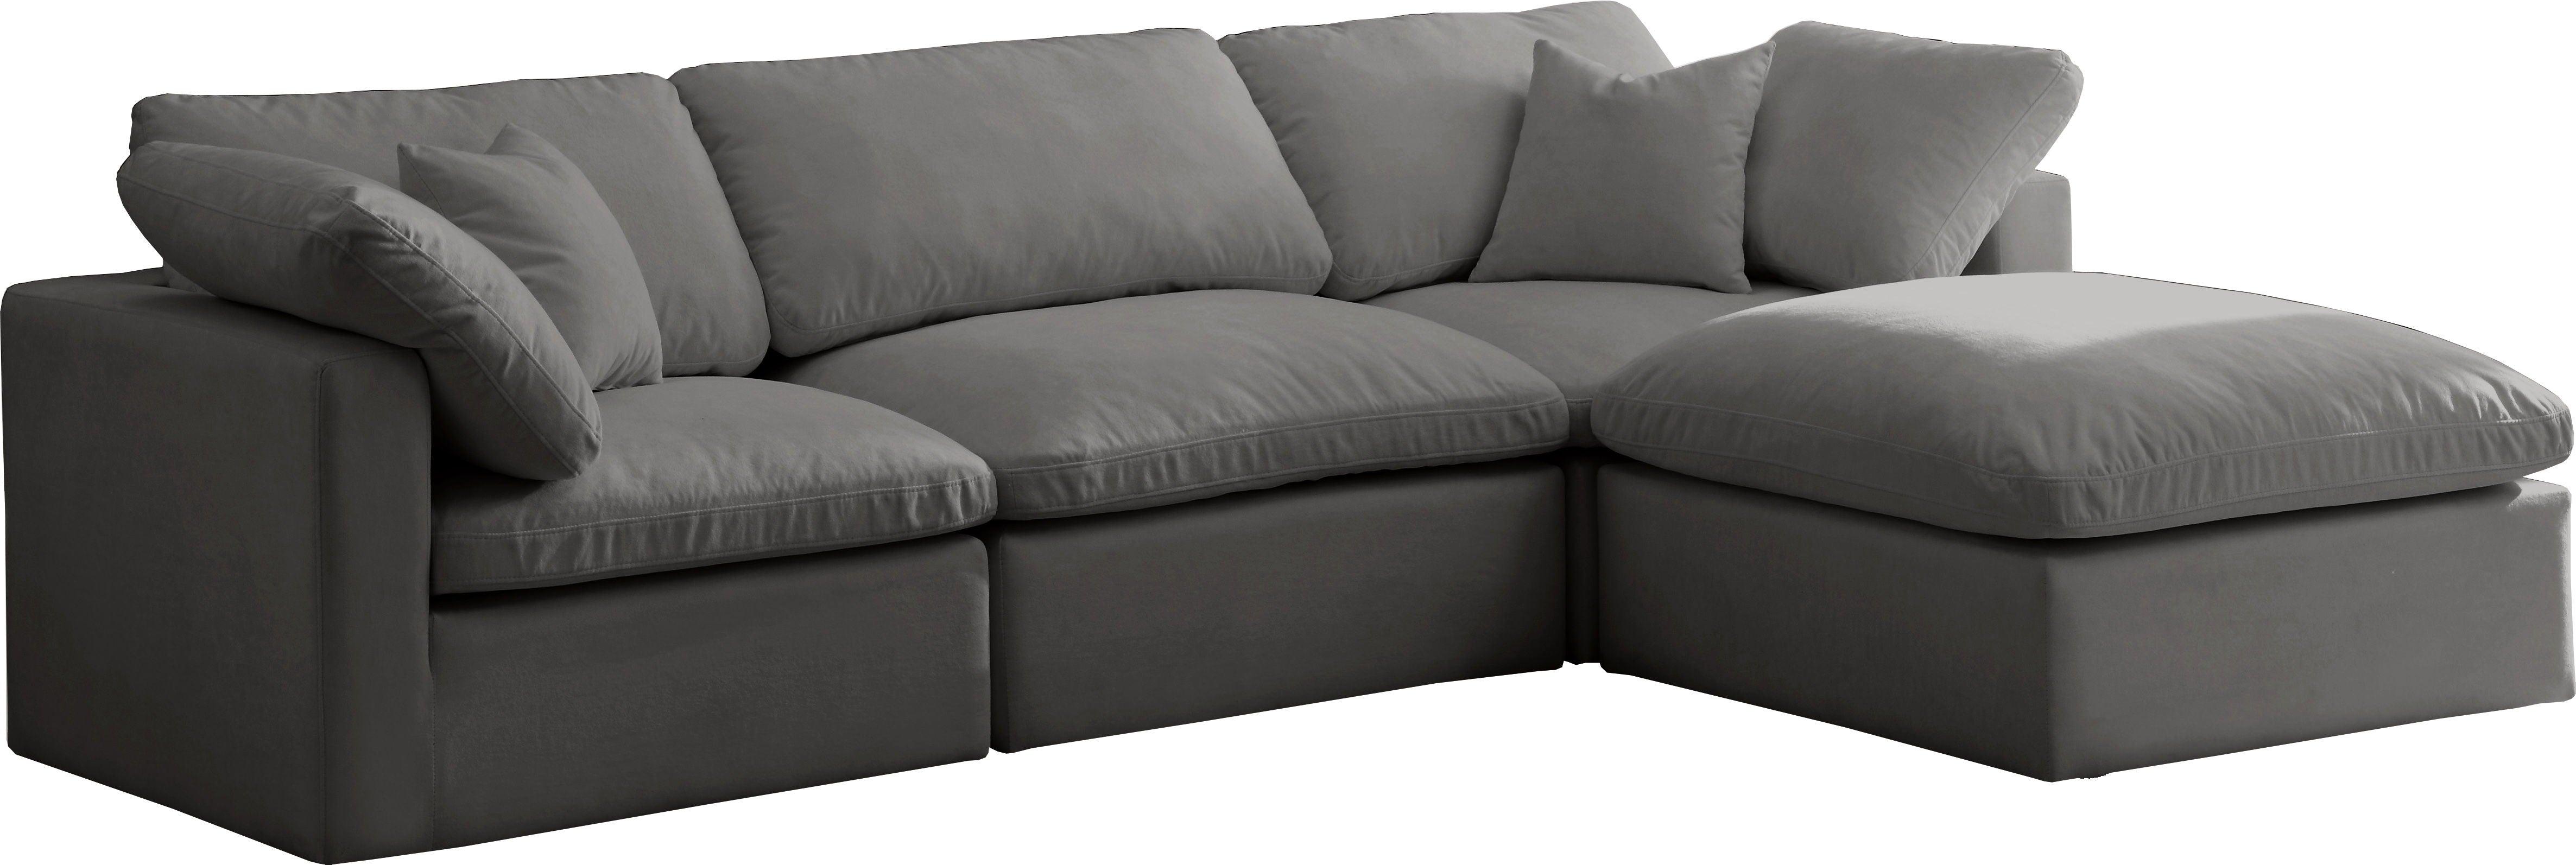 Meridian Furniture - Plush - Velvet Standart Comfort Modular Sectional - Grey - Modern & Contemporary - 5th Avenue Furniture